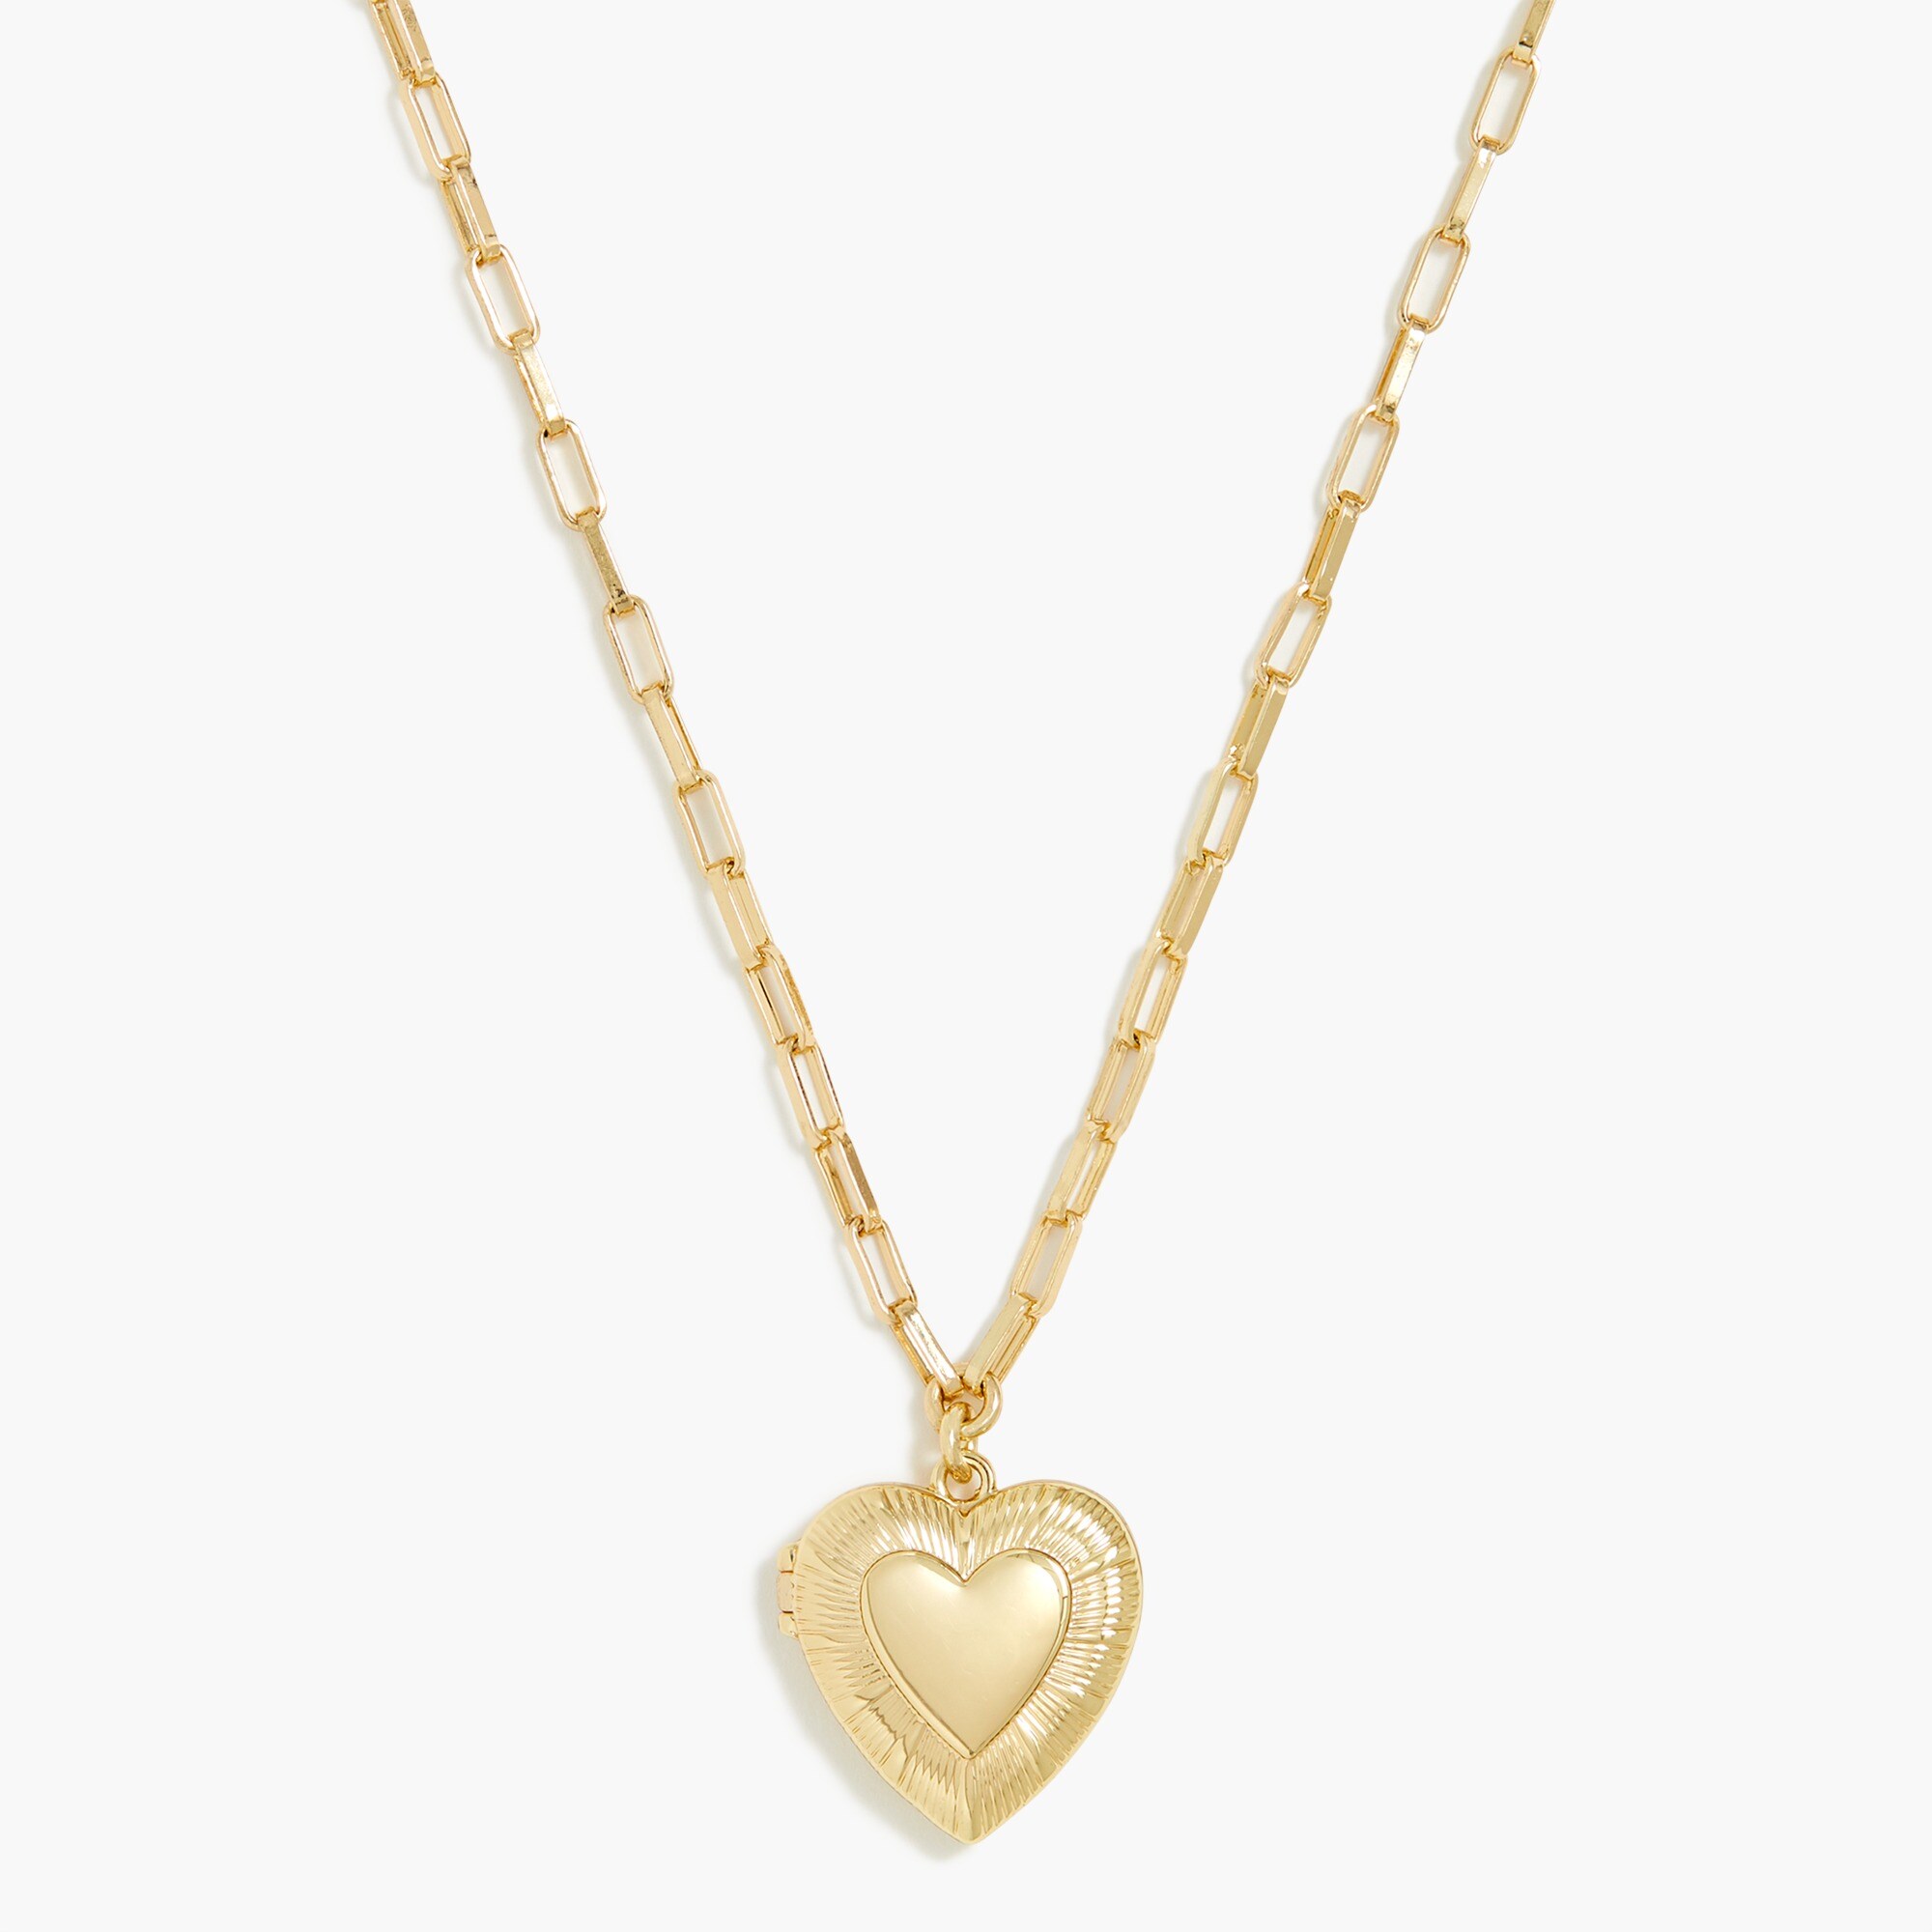  Heart locket necklace